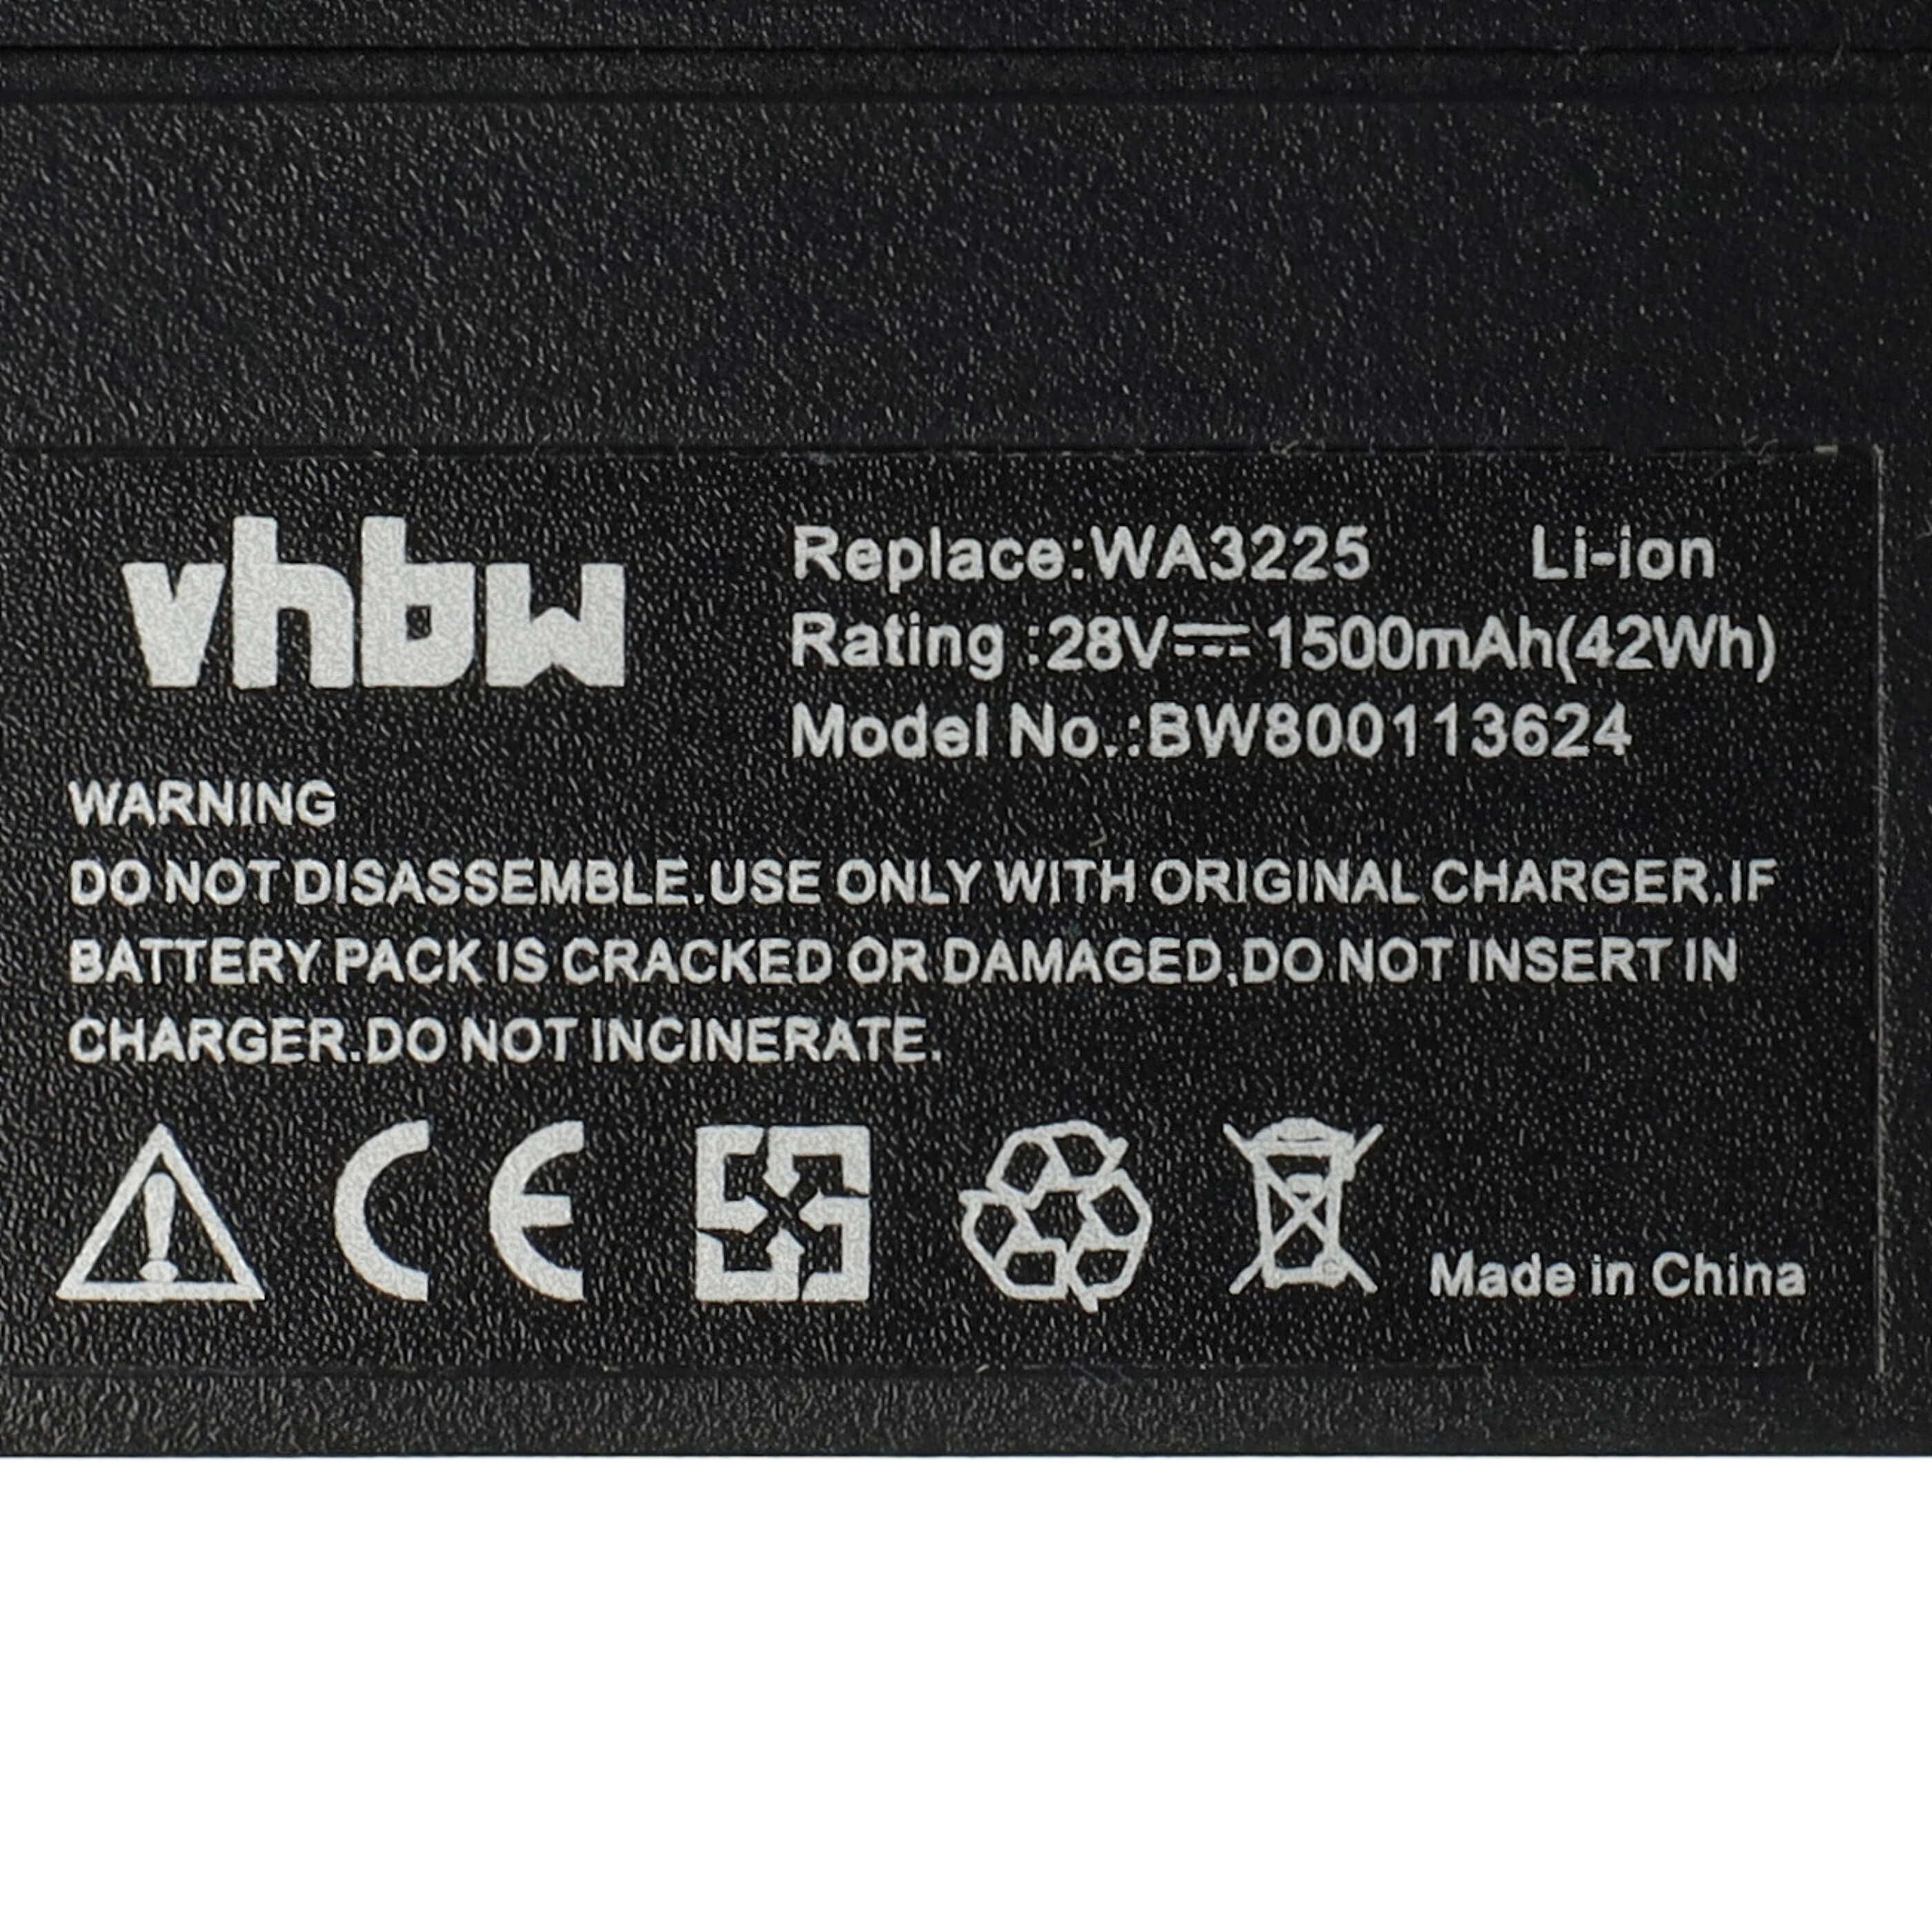 Akumulator do robota koszącego zamiennik Worx WA3226, WA3225, WA3565 - 1500 mAh 28 V Li-Ion, czarny